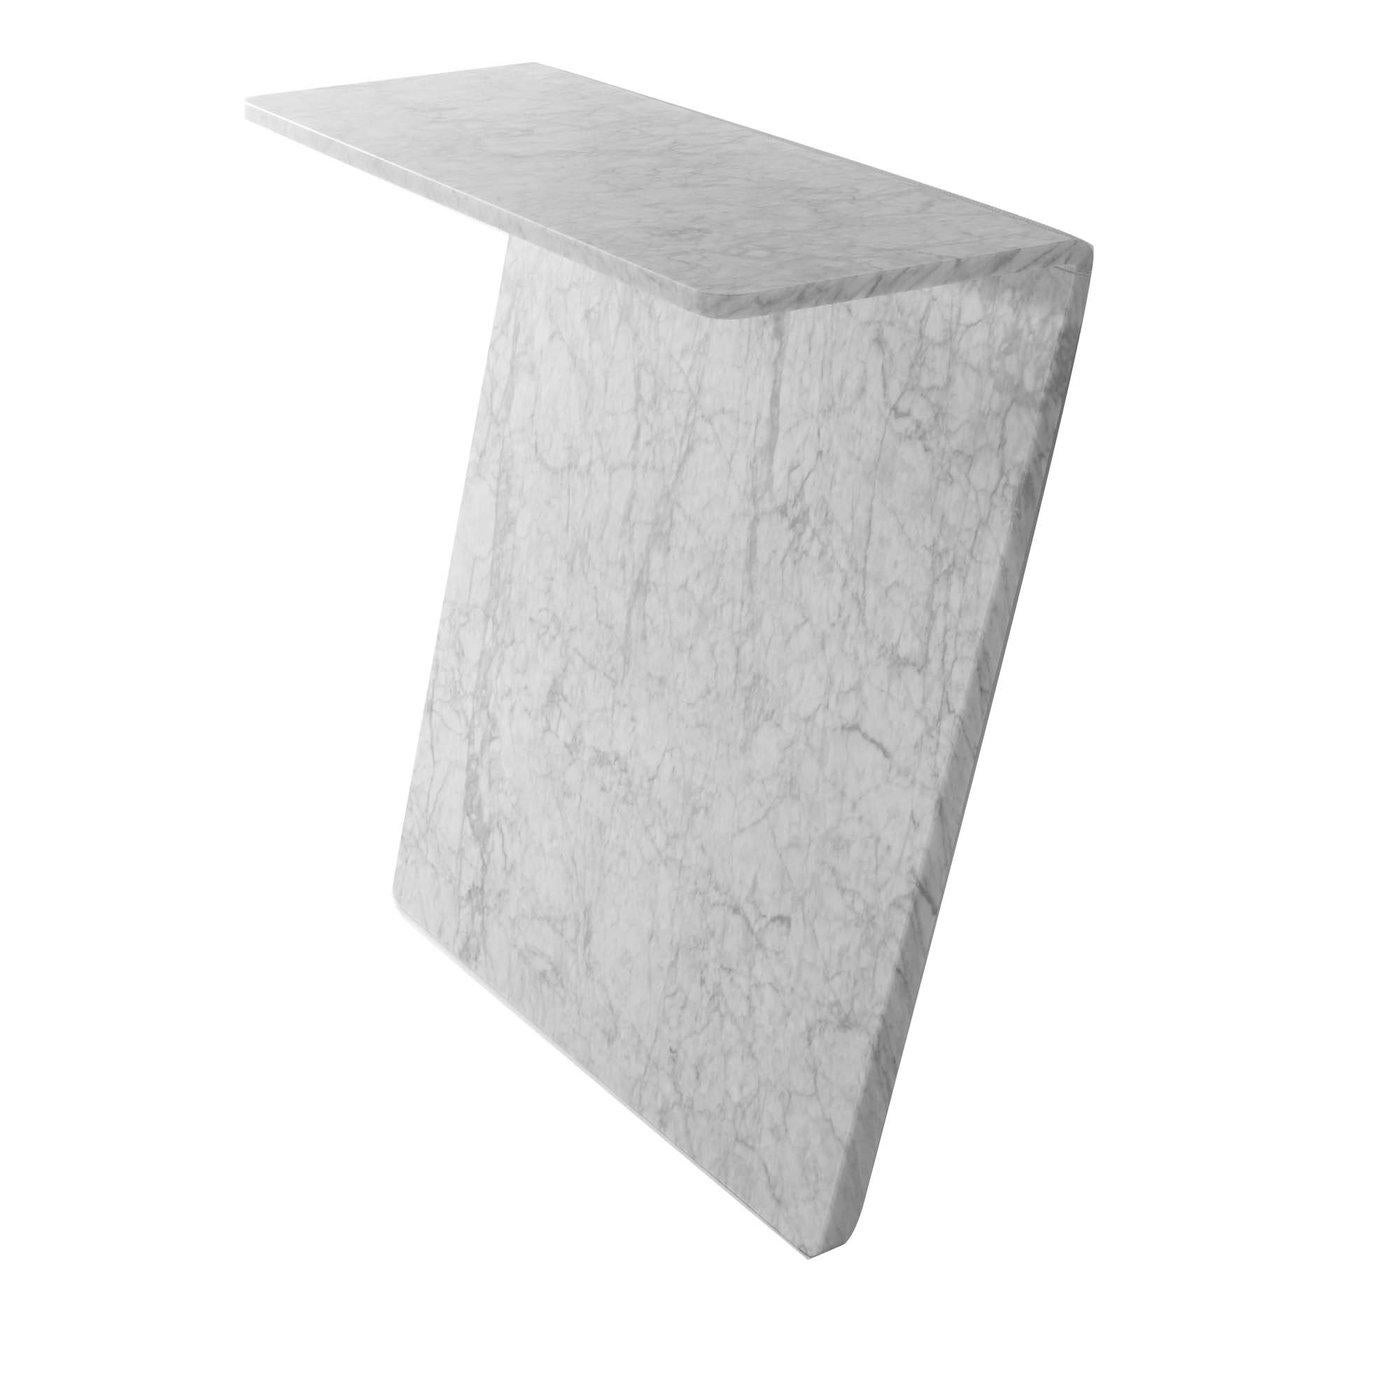 Console in white Carrara marble, matt polished finish.